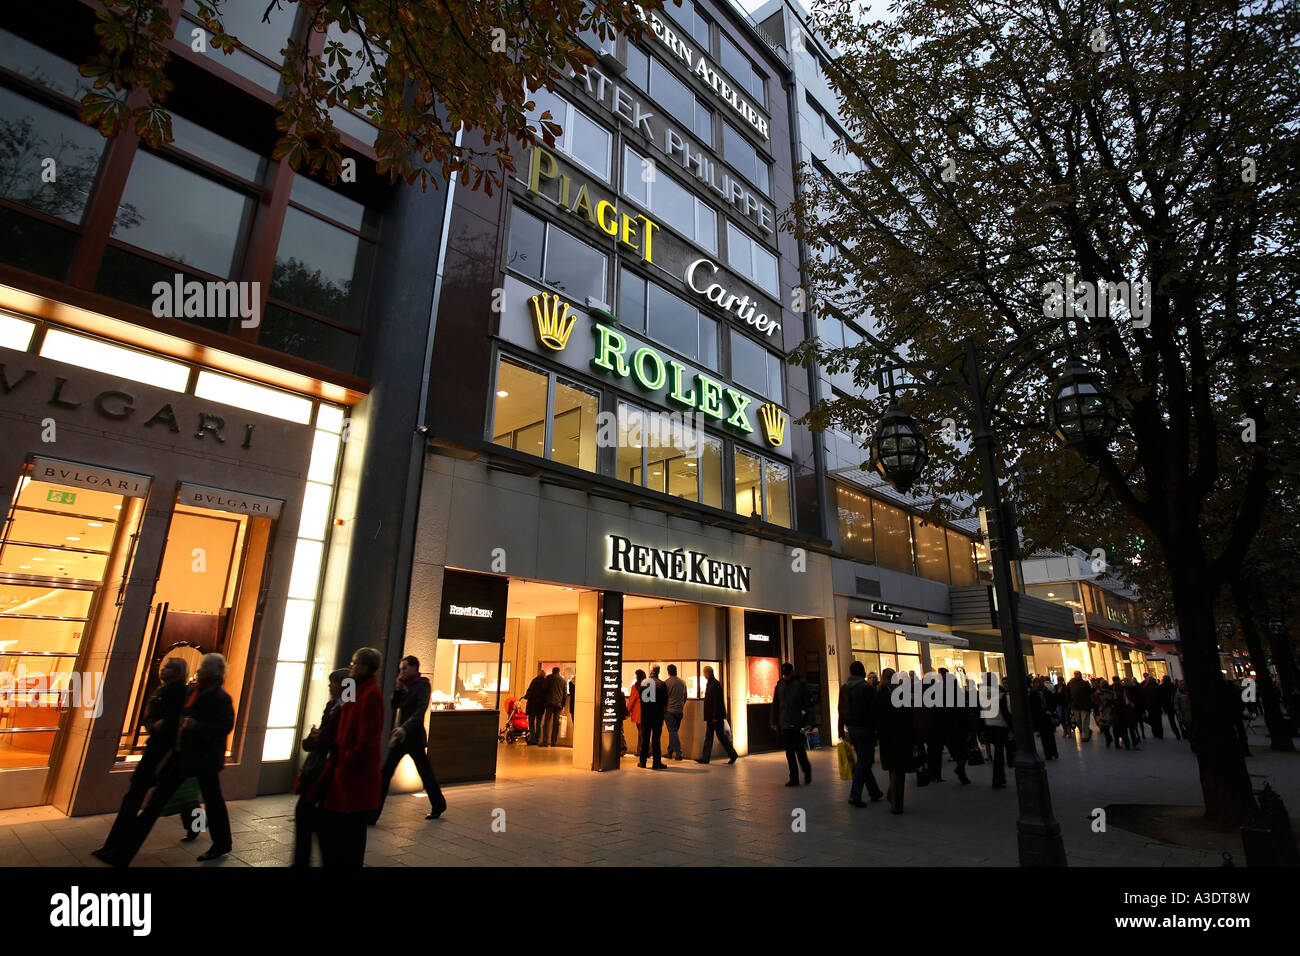 Shopping street with luxury watch shop, Koenigsallee, Duesseldorf, Germany  Stock Photo - Alamy